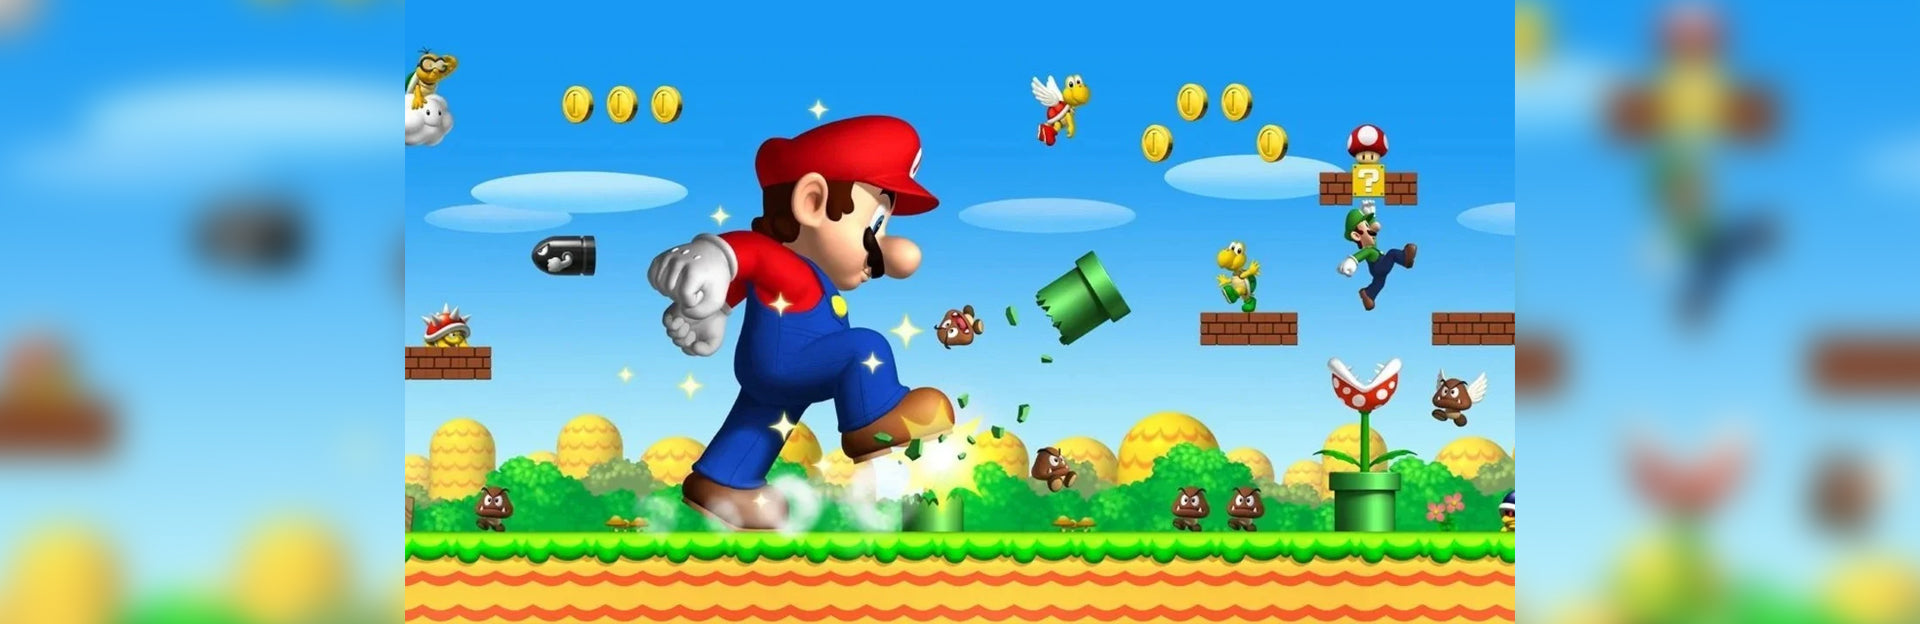 Super Mario 64 Vs. Super Mario Galaxy: Which Holds Up More?